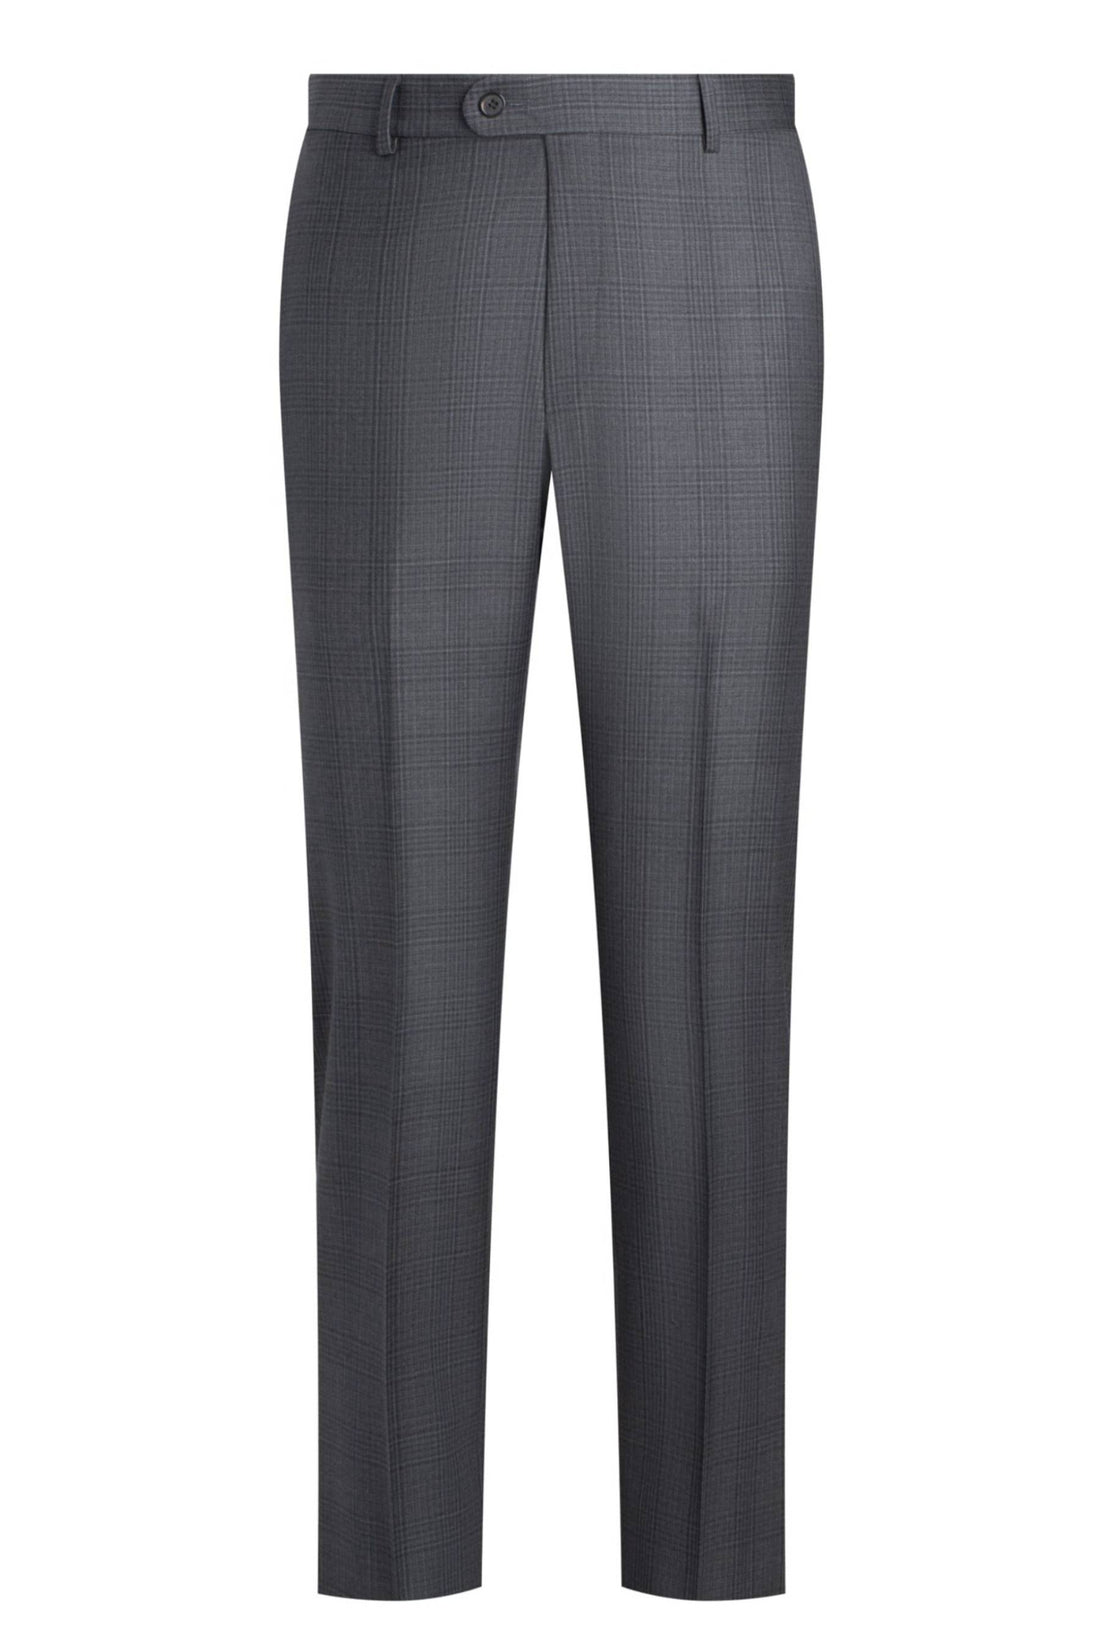 Heritage Gold Grey Plaid Wool Suit - front pants